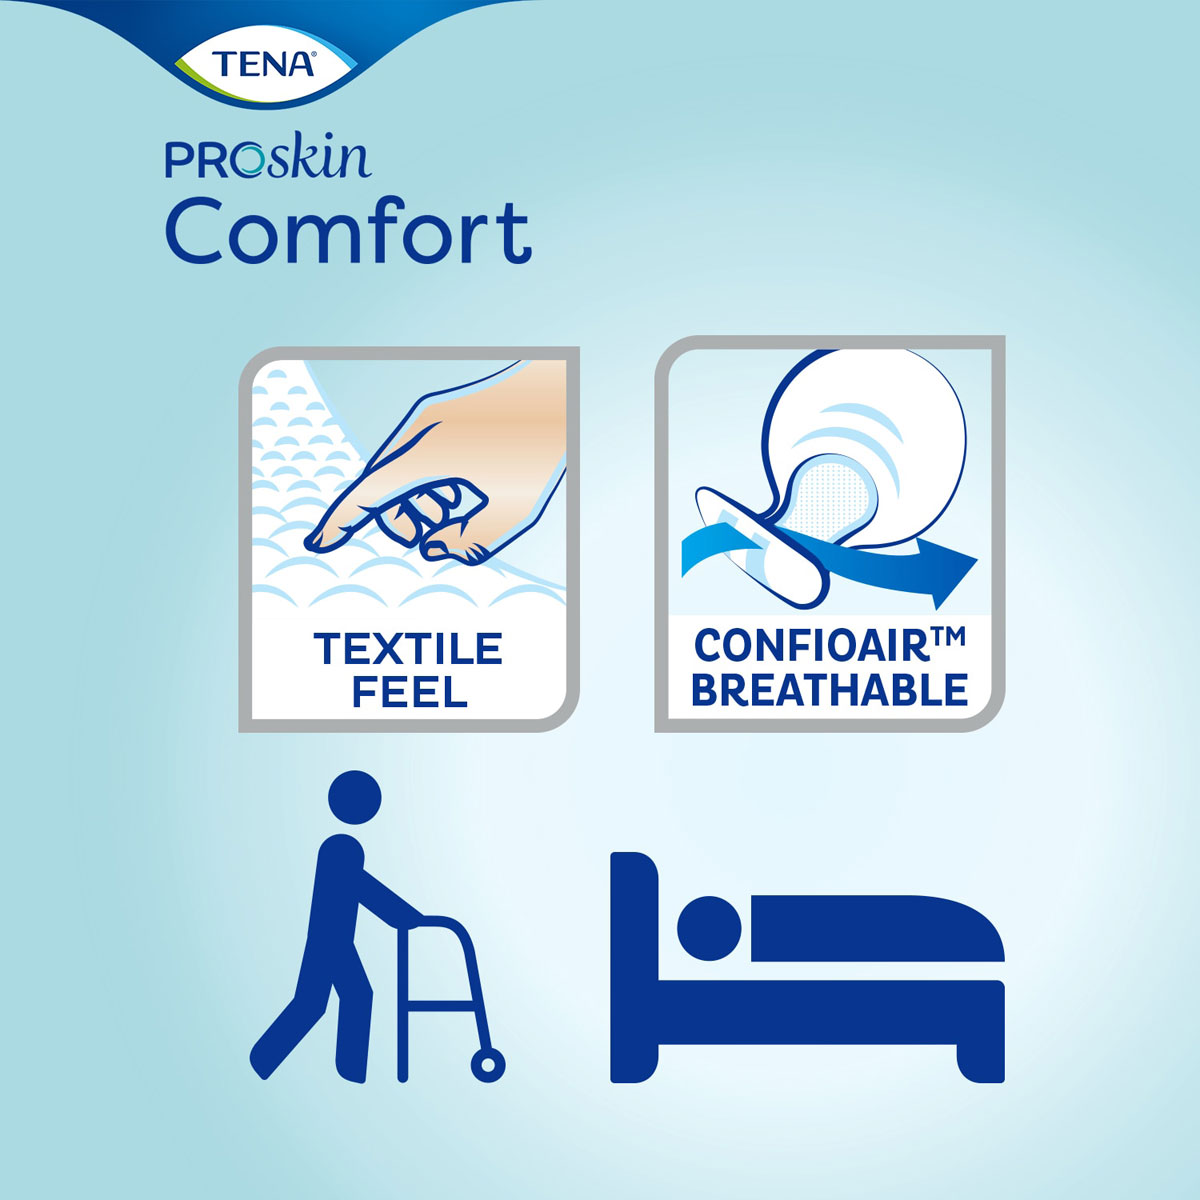 TENA Comfort - Maxi - Inkontinenzvorlagen (2x28 Stück)